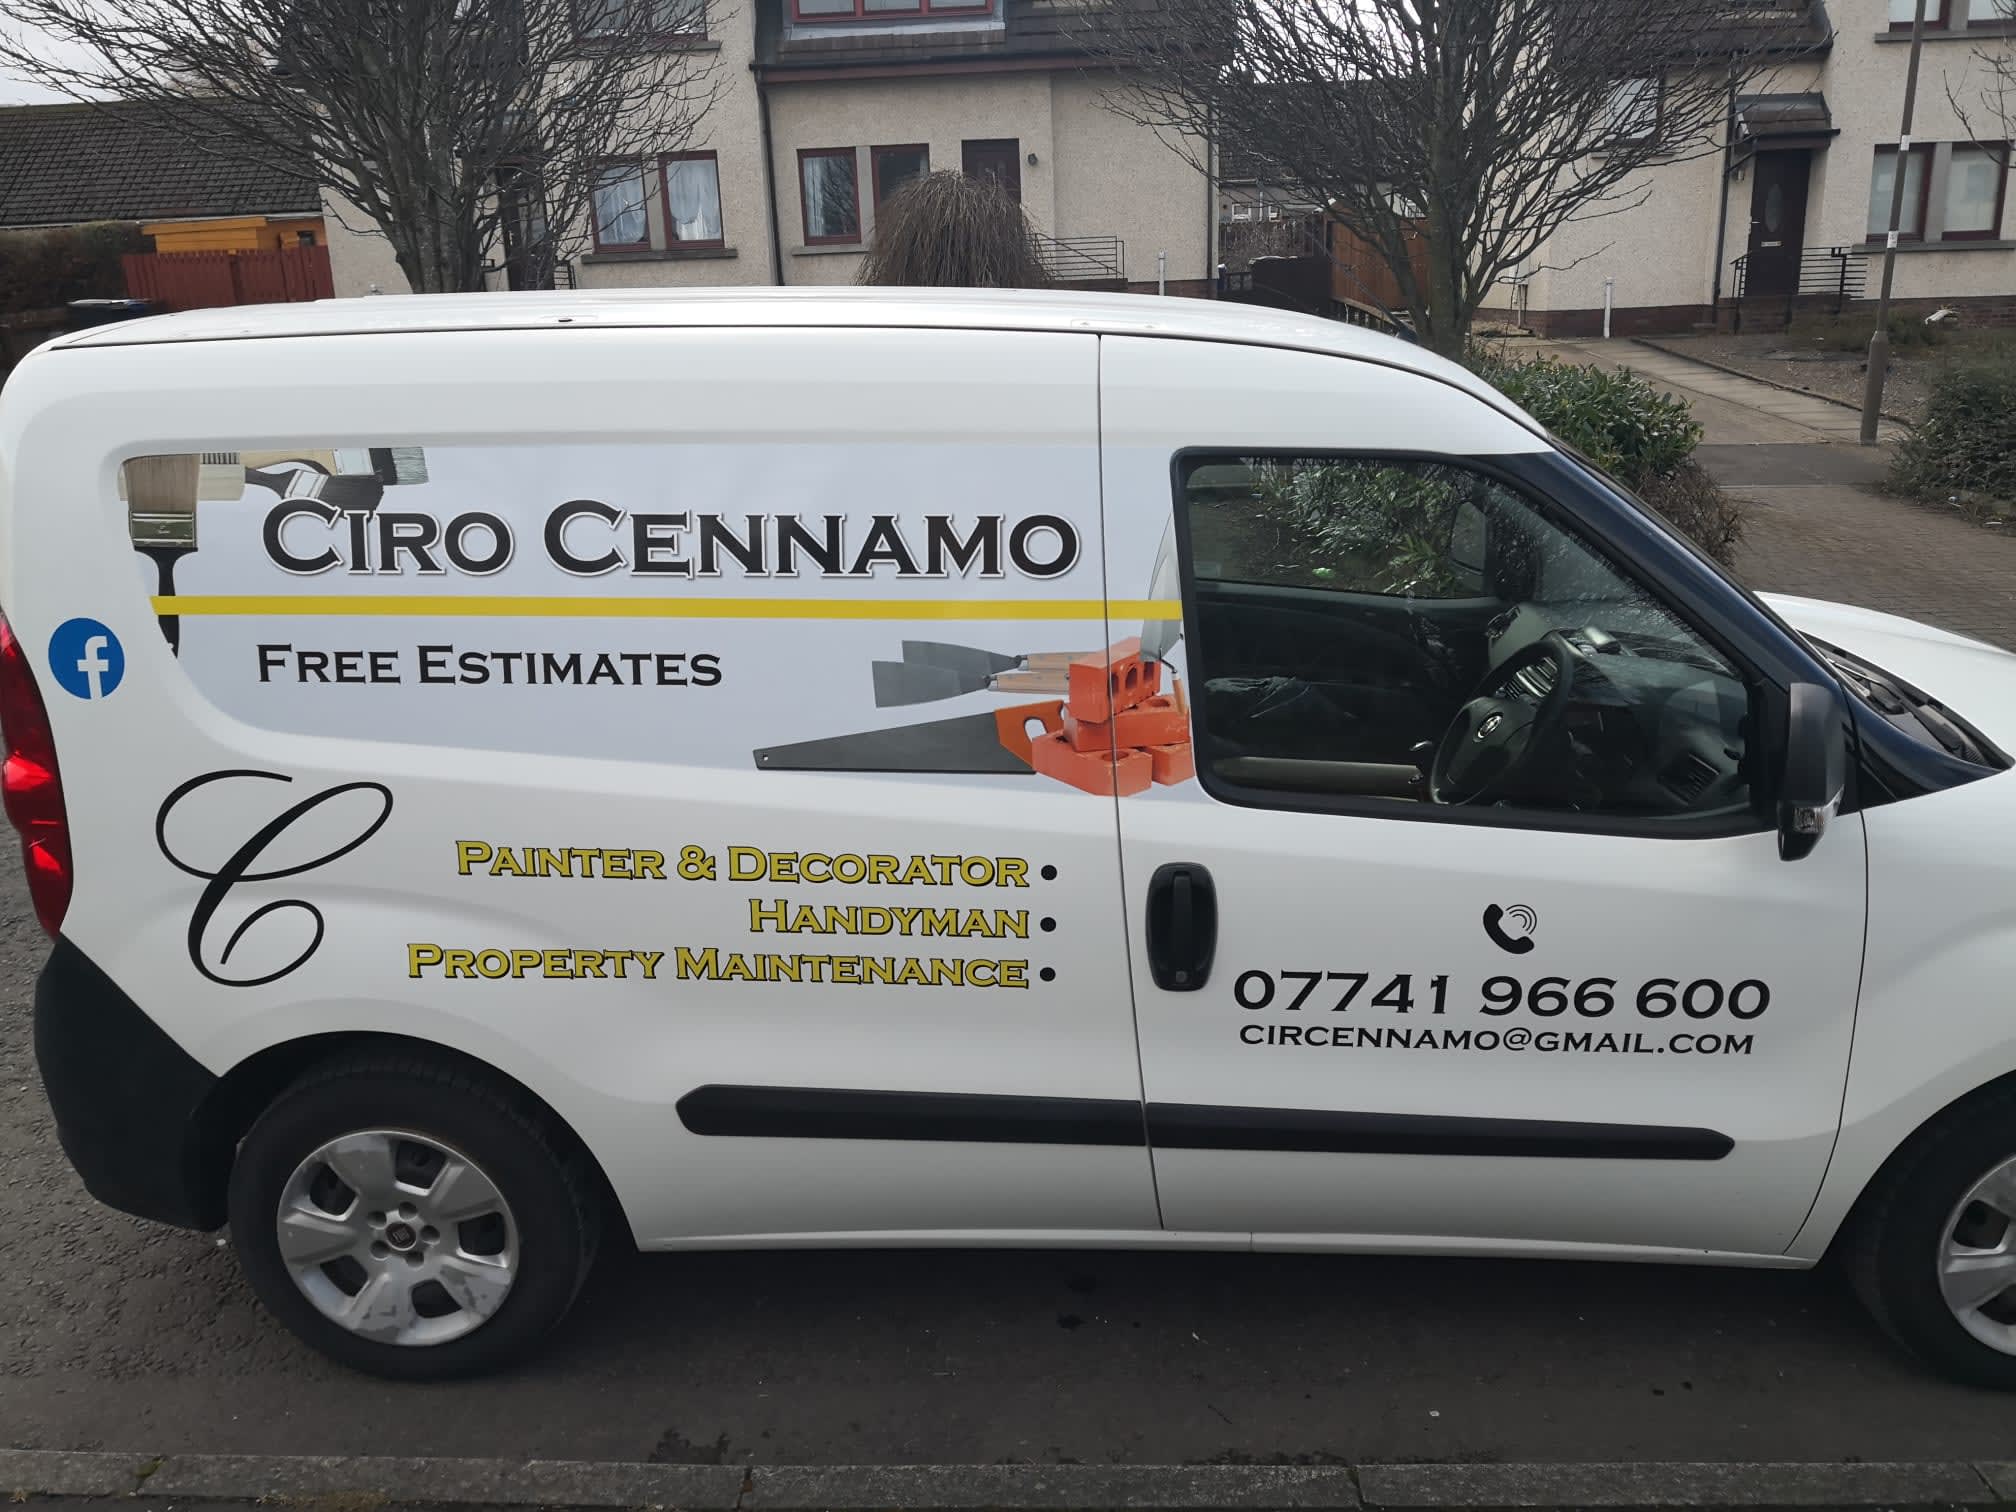 Images Ciro Cennamo Painter & Decorator/Property Maintenance